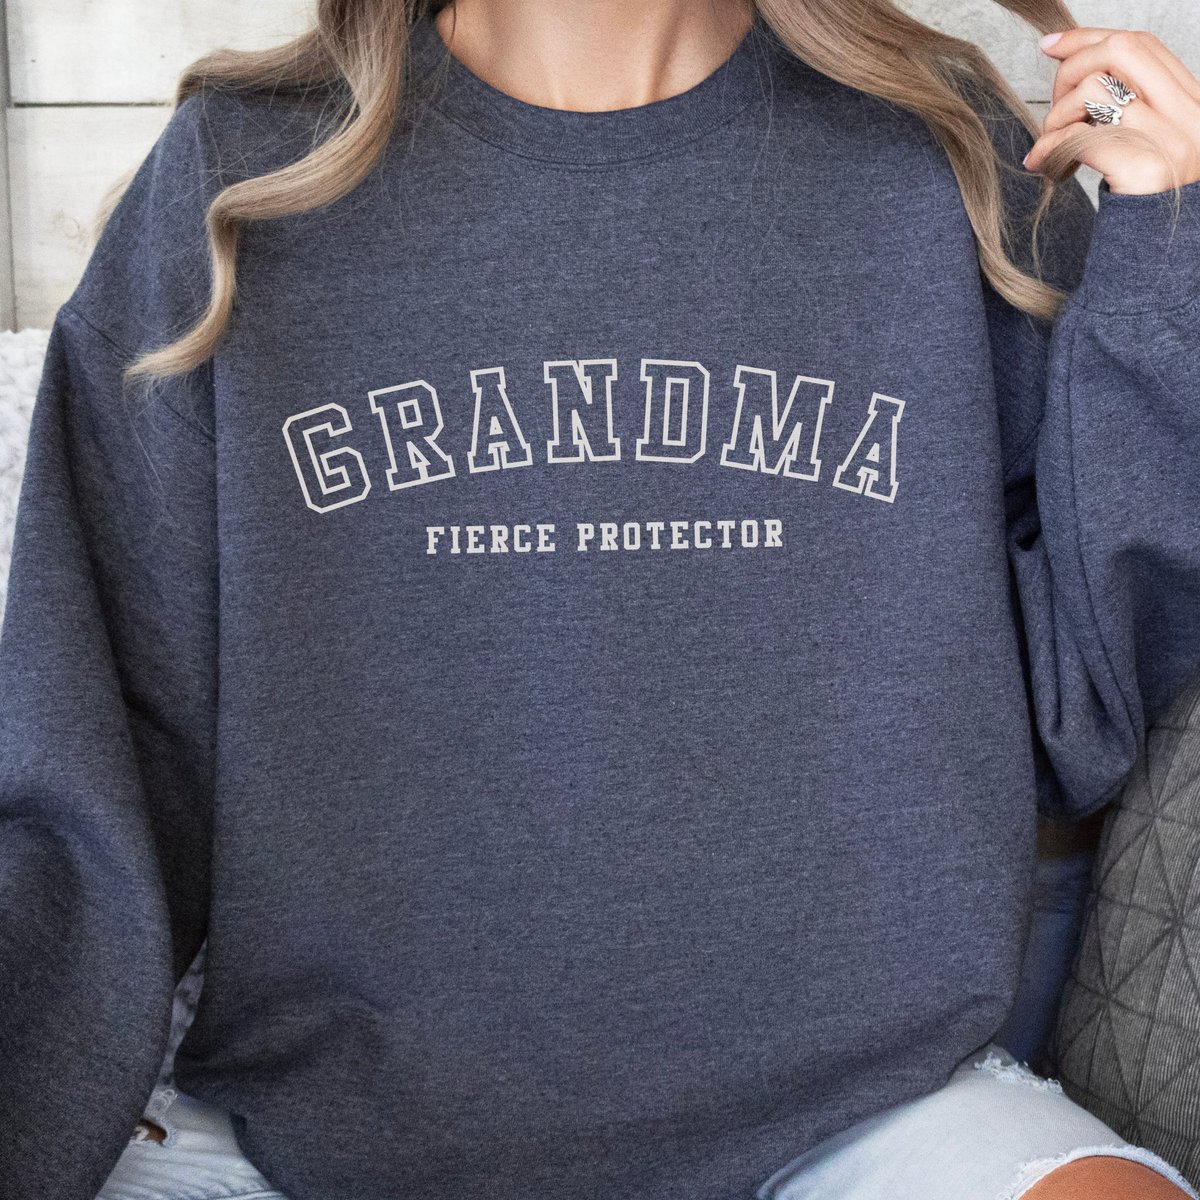 We want fierce grandparents that stand up for their grandchildren! 🤍🤍
#fiercegrandma  #fierceprotector #childadvocacy #Grandma 

worthyandwonderfulshop.com/products/grand…